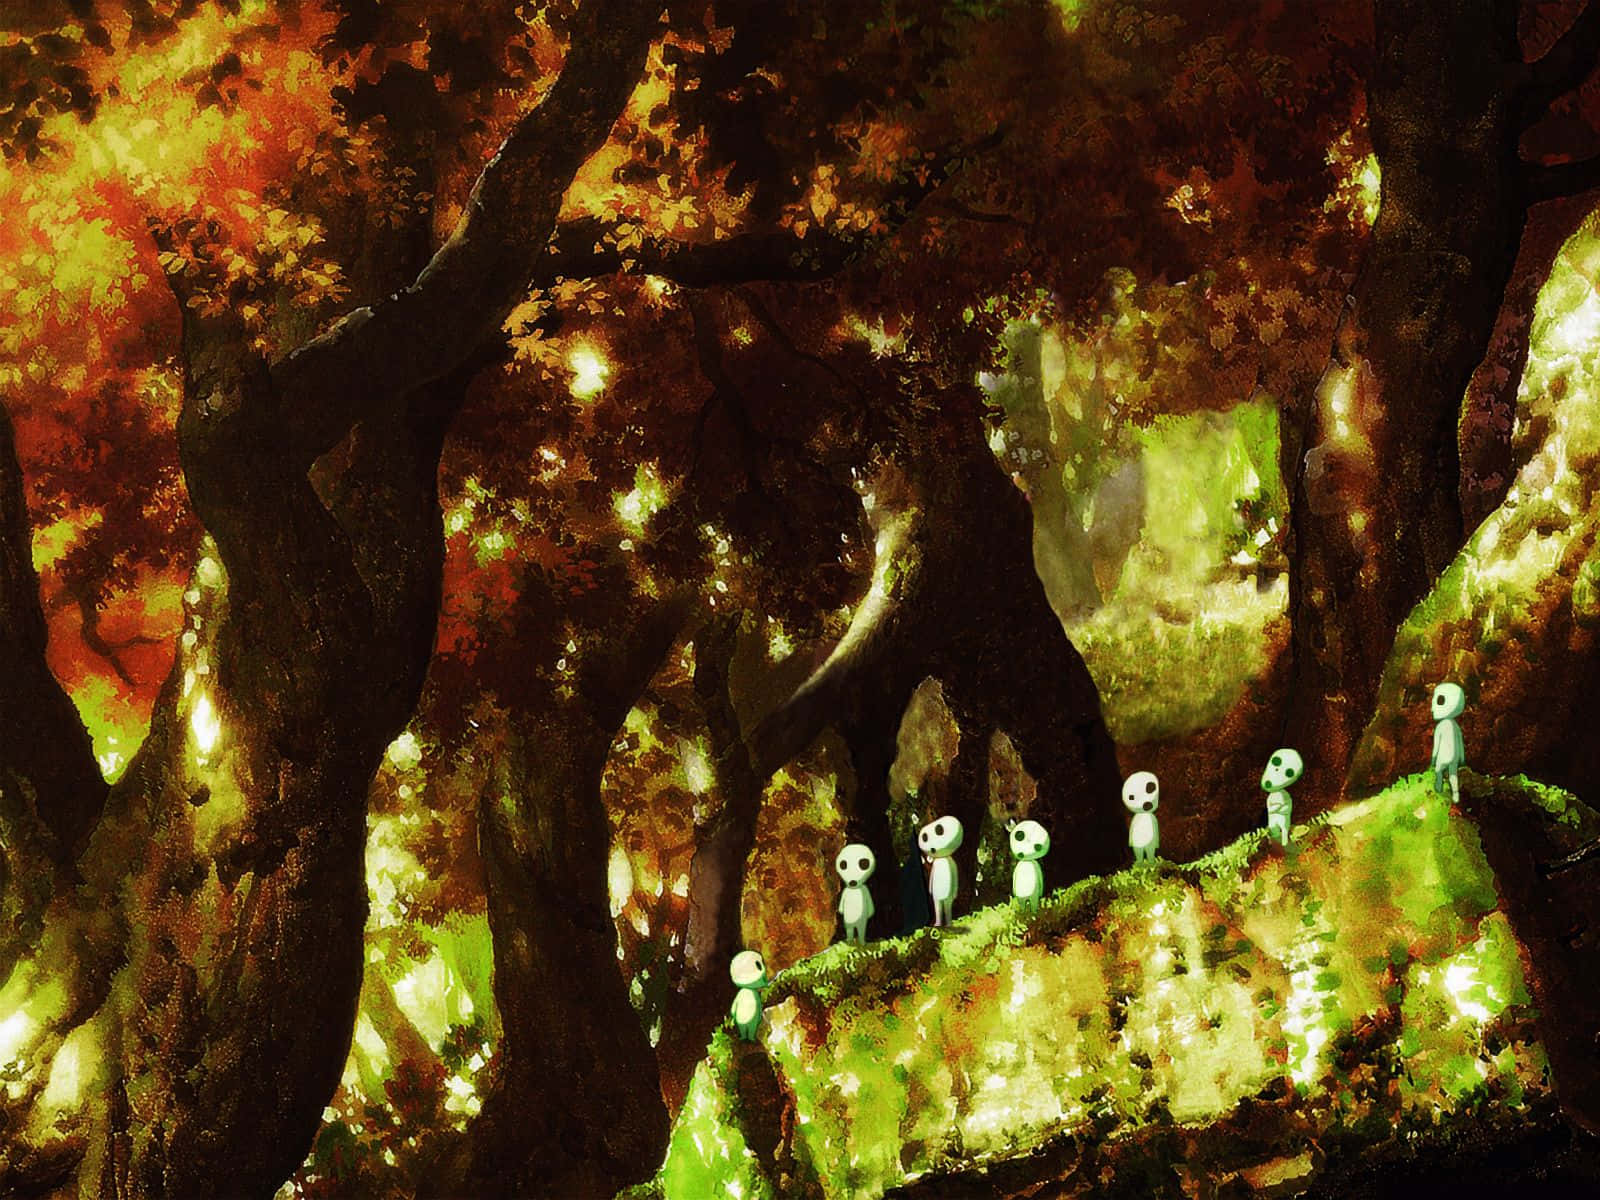 A tranquil Studio Ghibli landscape